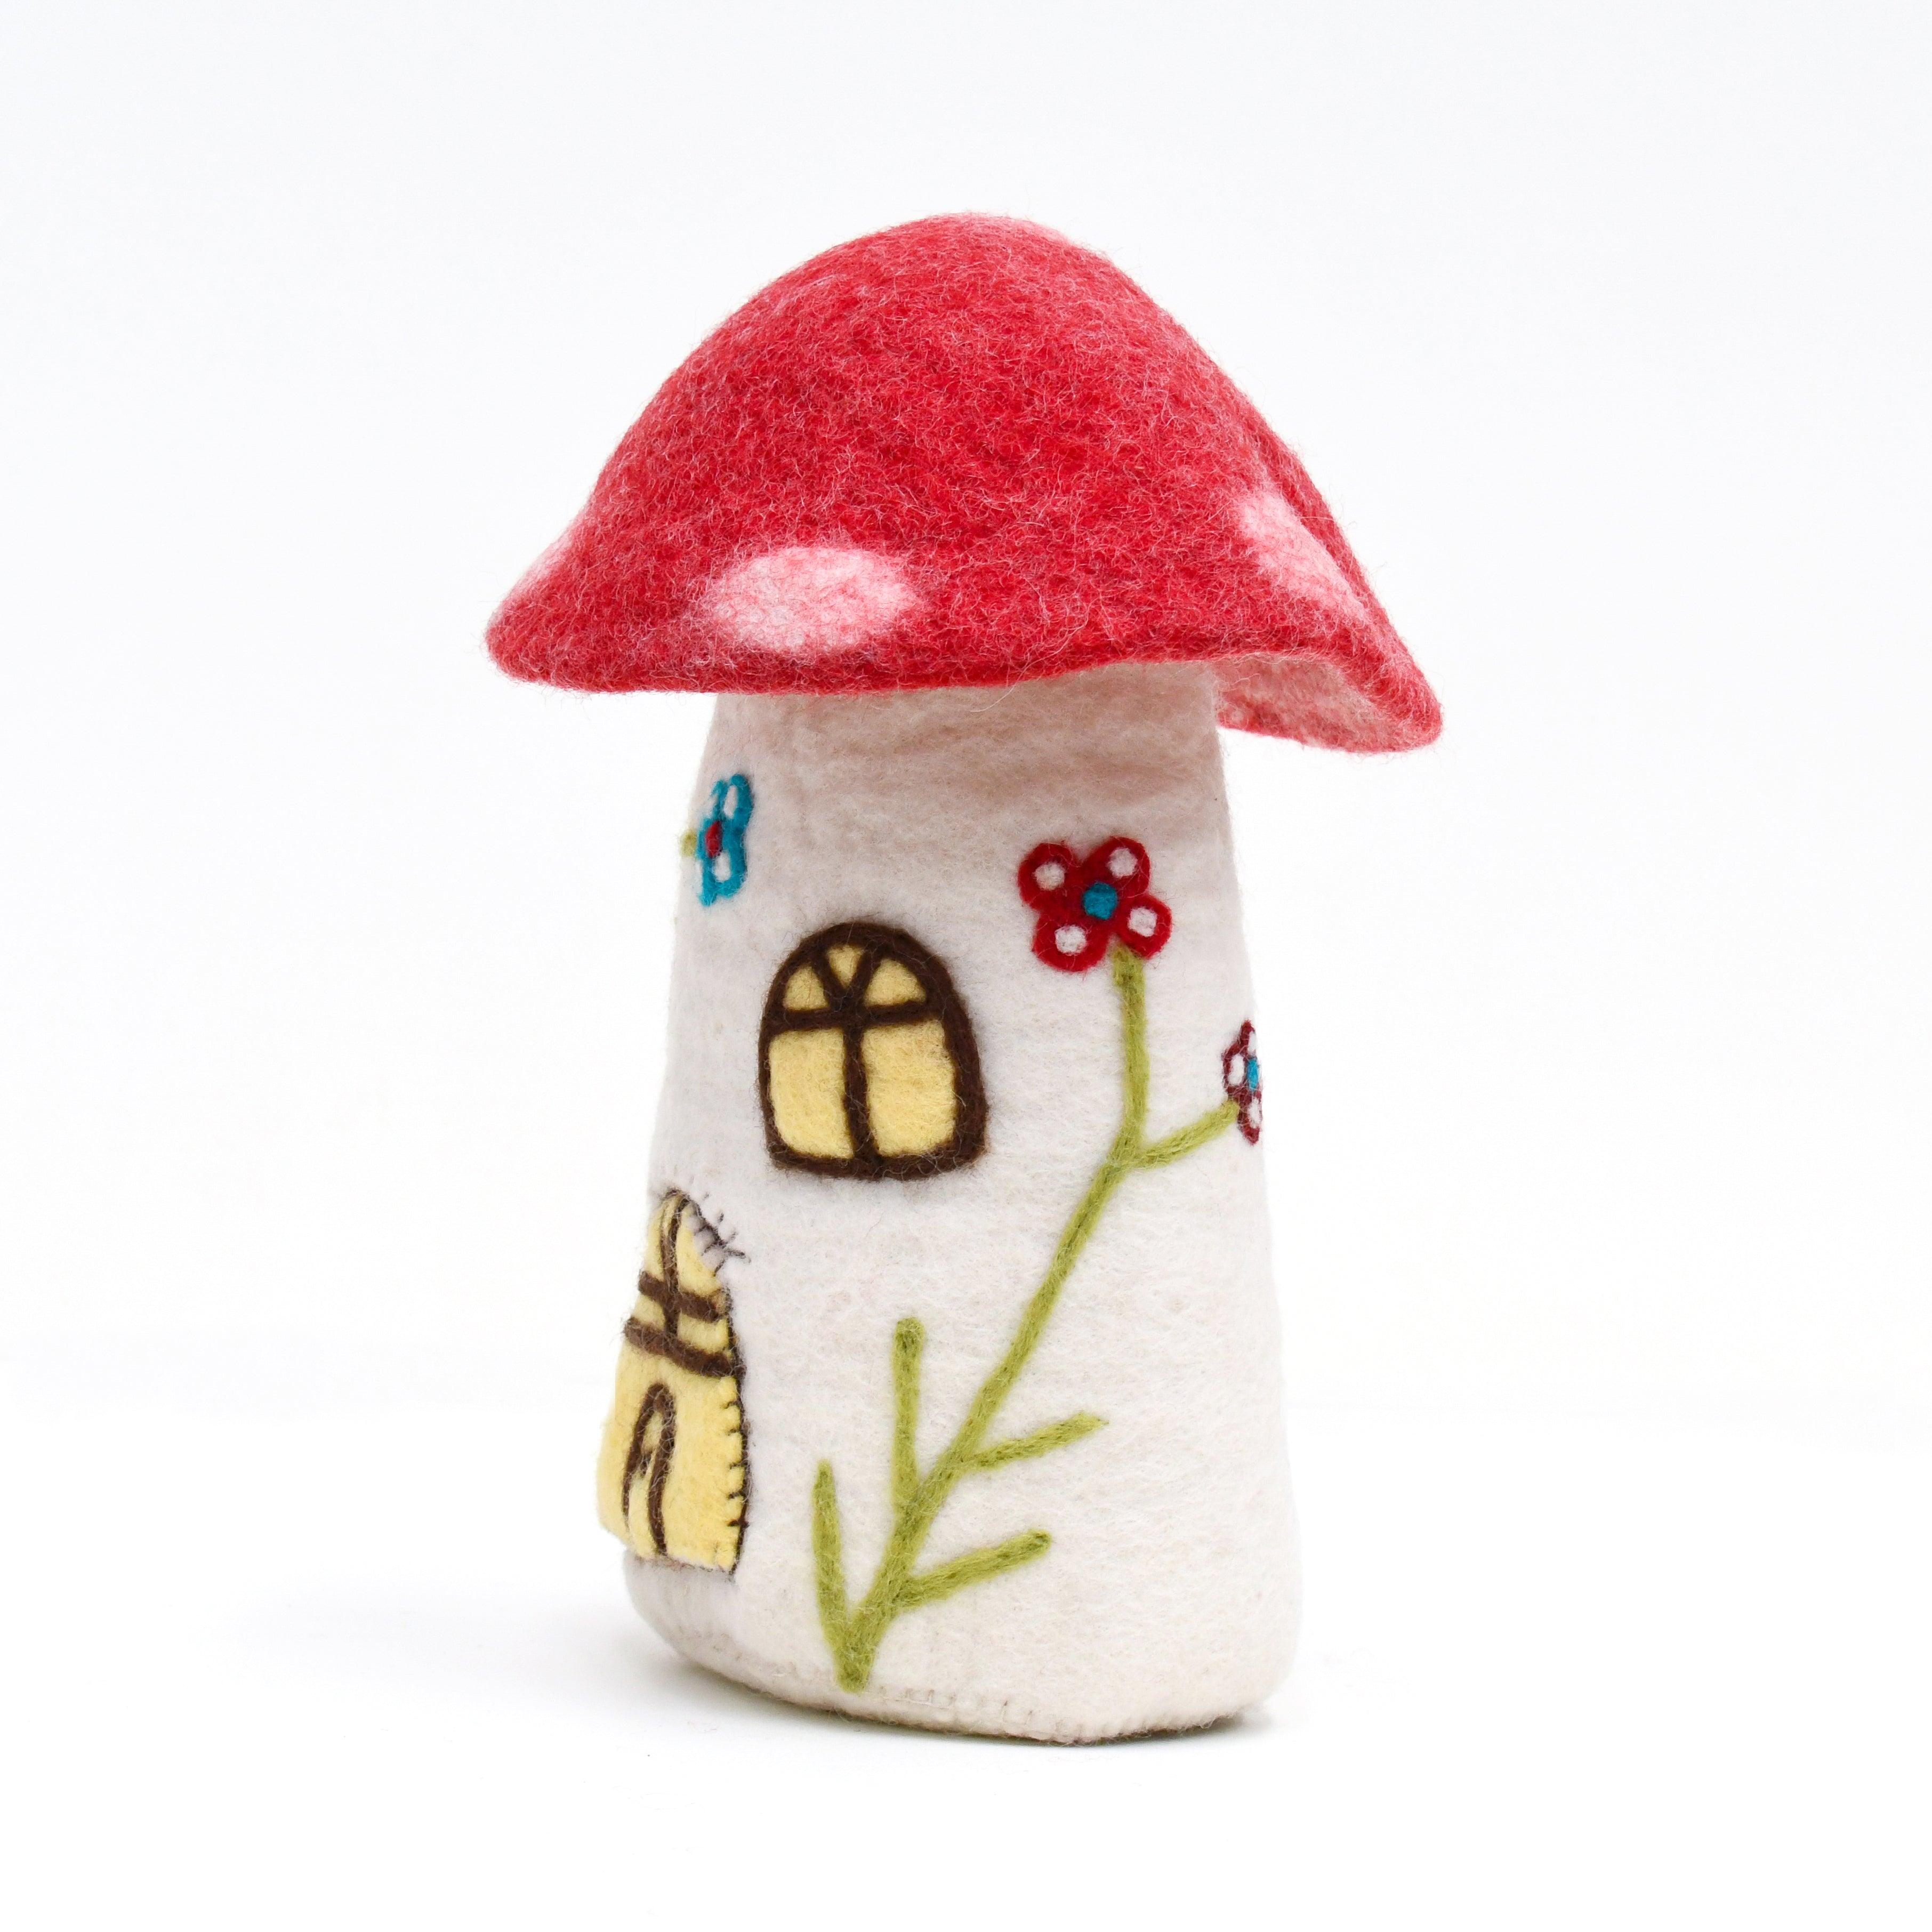 Fairies and Gnomes House - Red Mushroom (Toadstool) - Tara Treasures